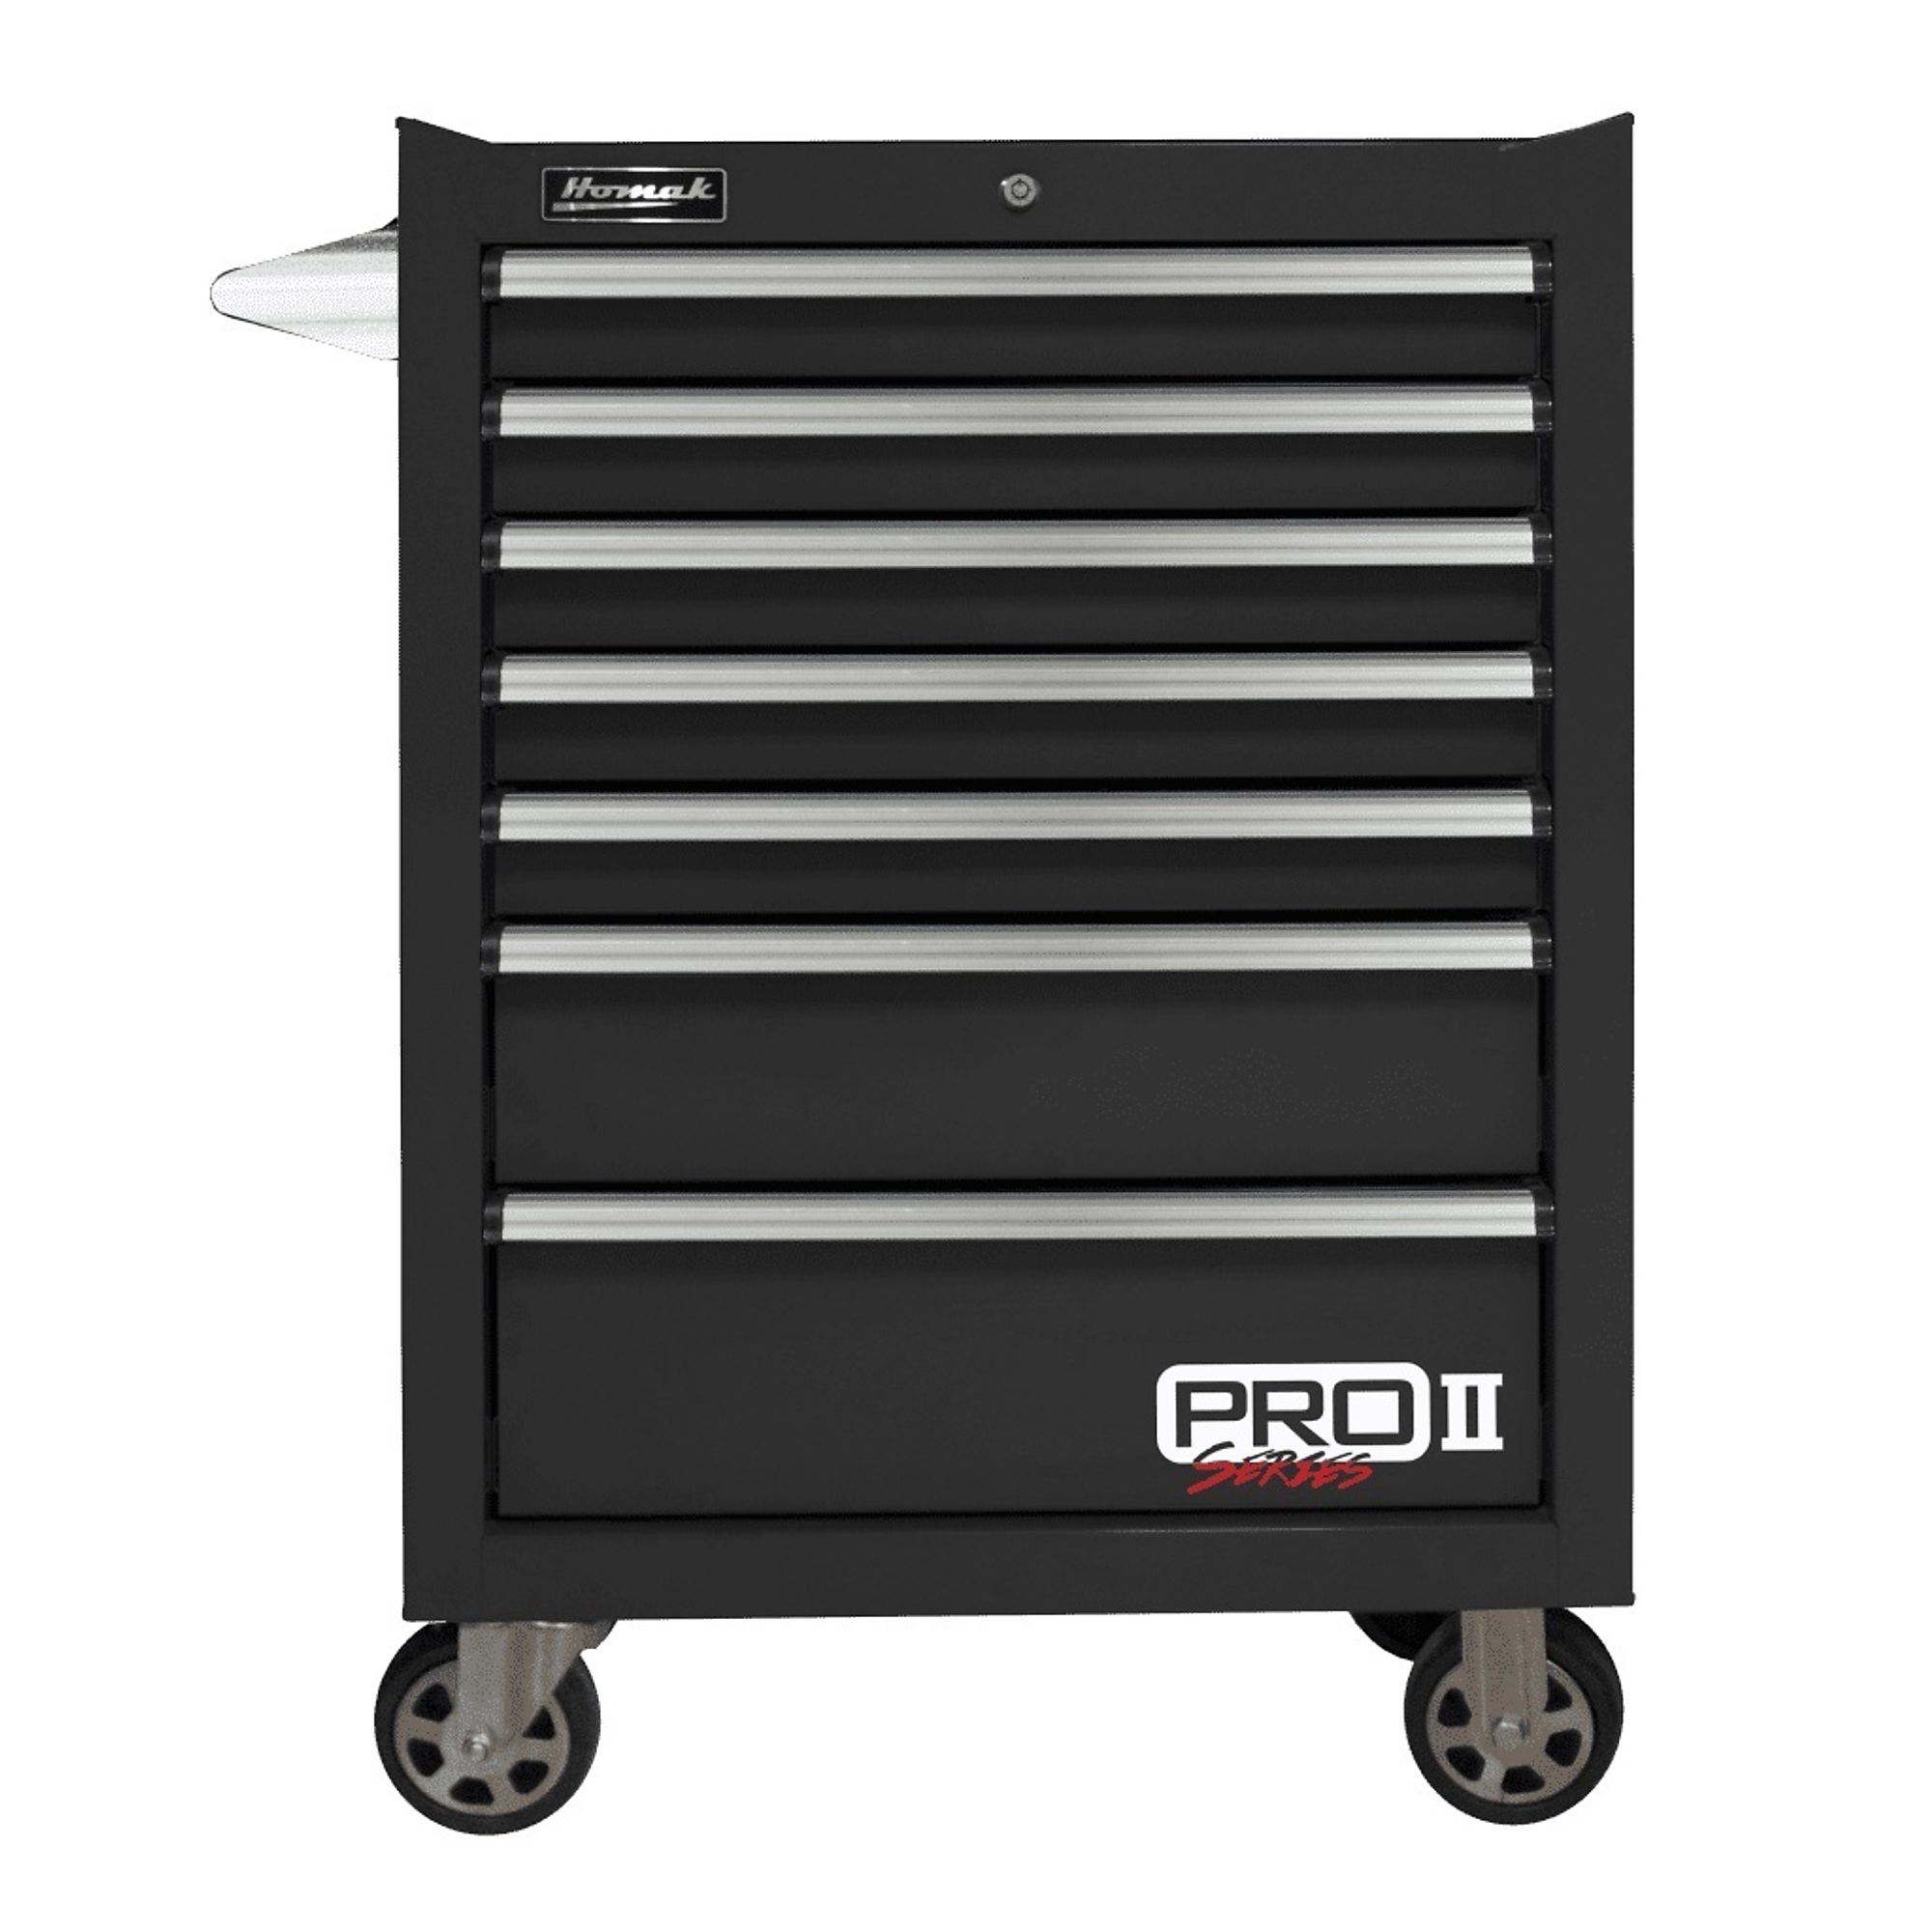 Homak 27Inch Pro II 7-Drawer Rolling Tool Cabinet, 9115 Cu. Inch of Storage, 27Inch W x 24.5Inch D x 39Inch H, Black, Model BK04027702